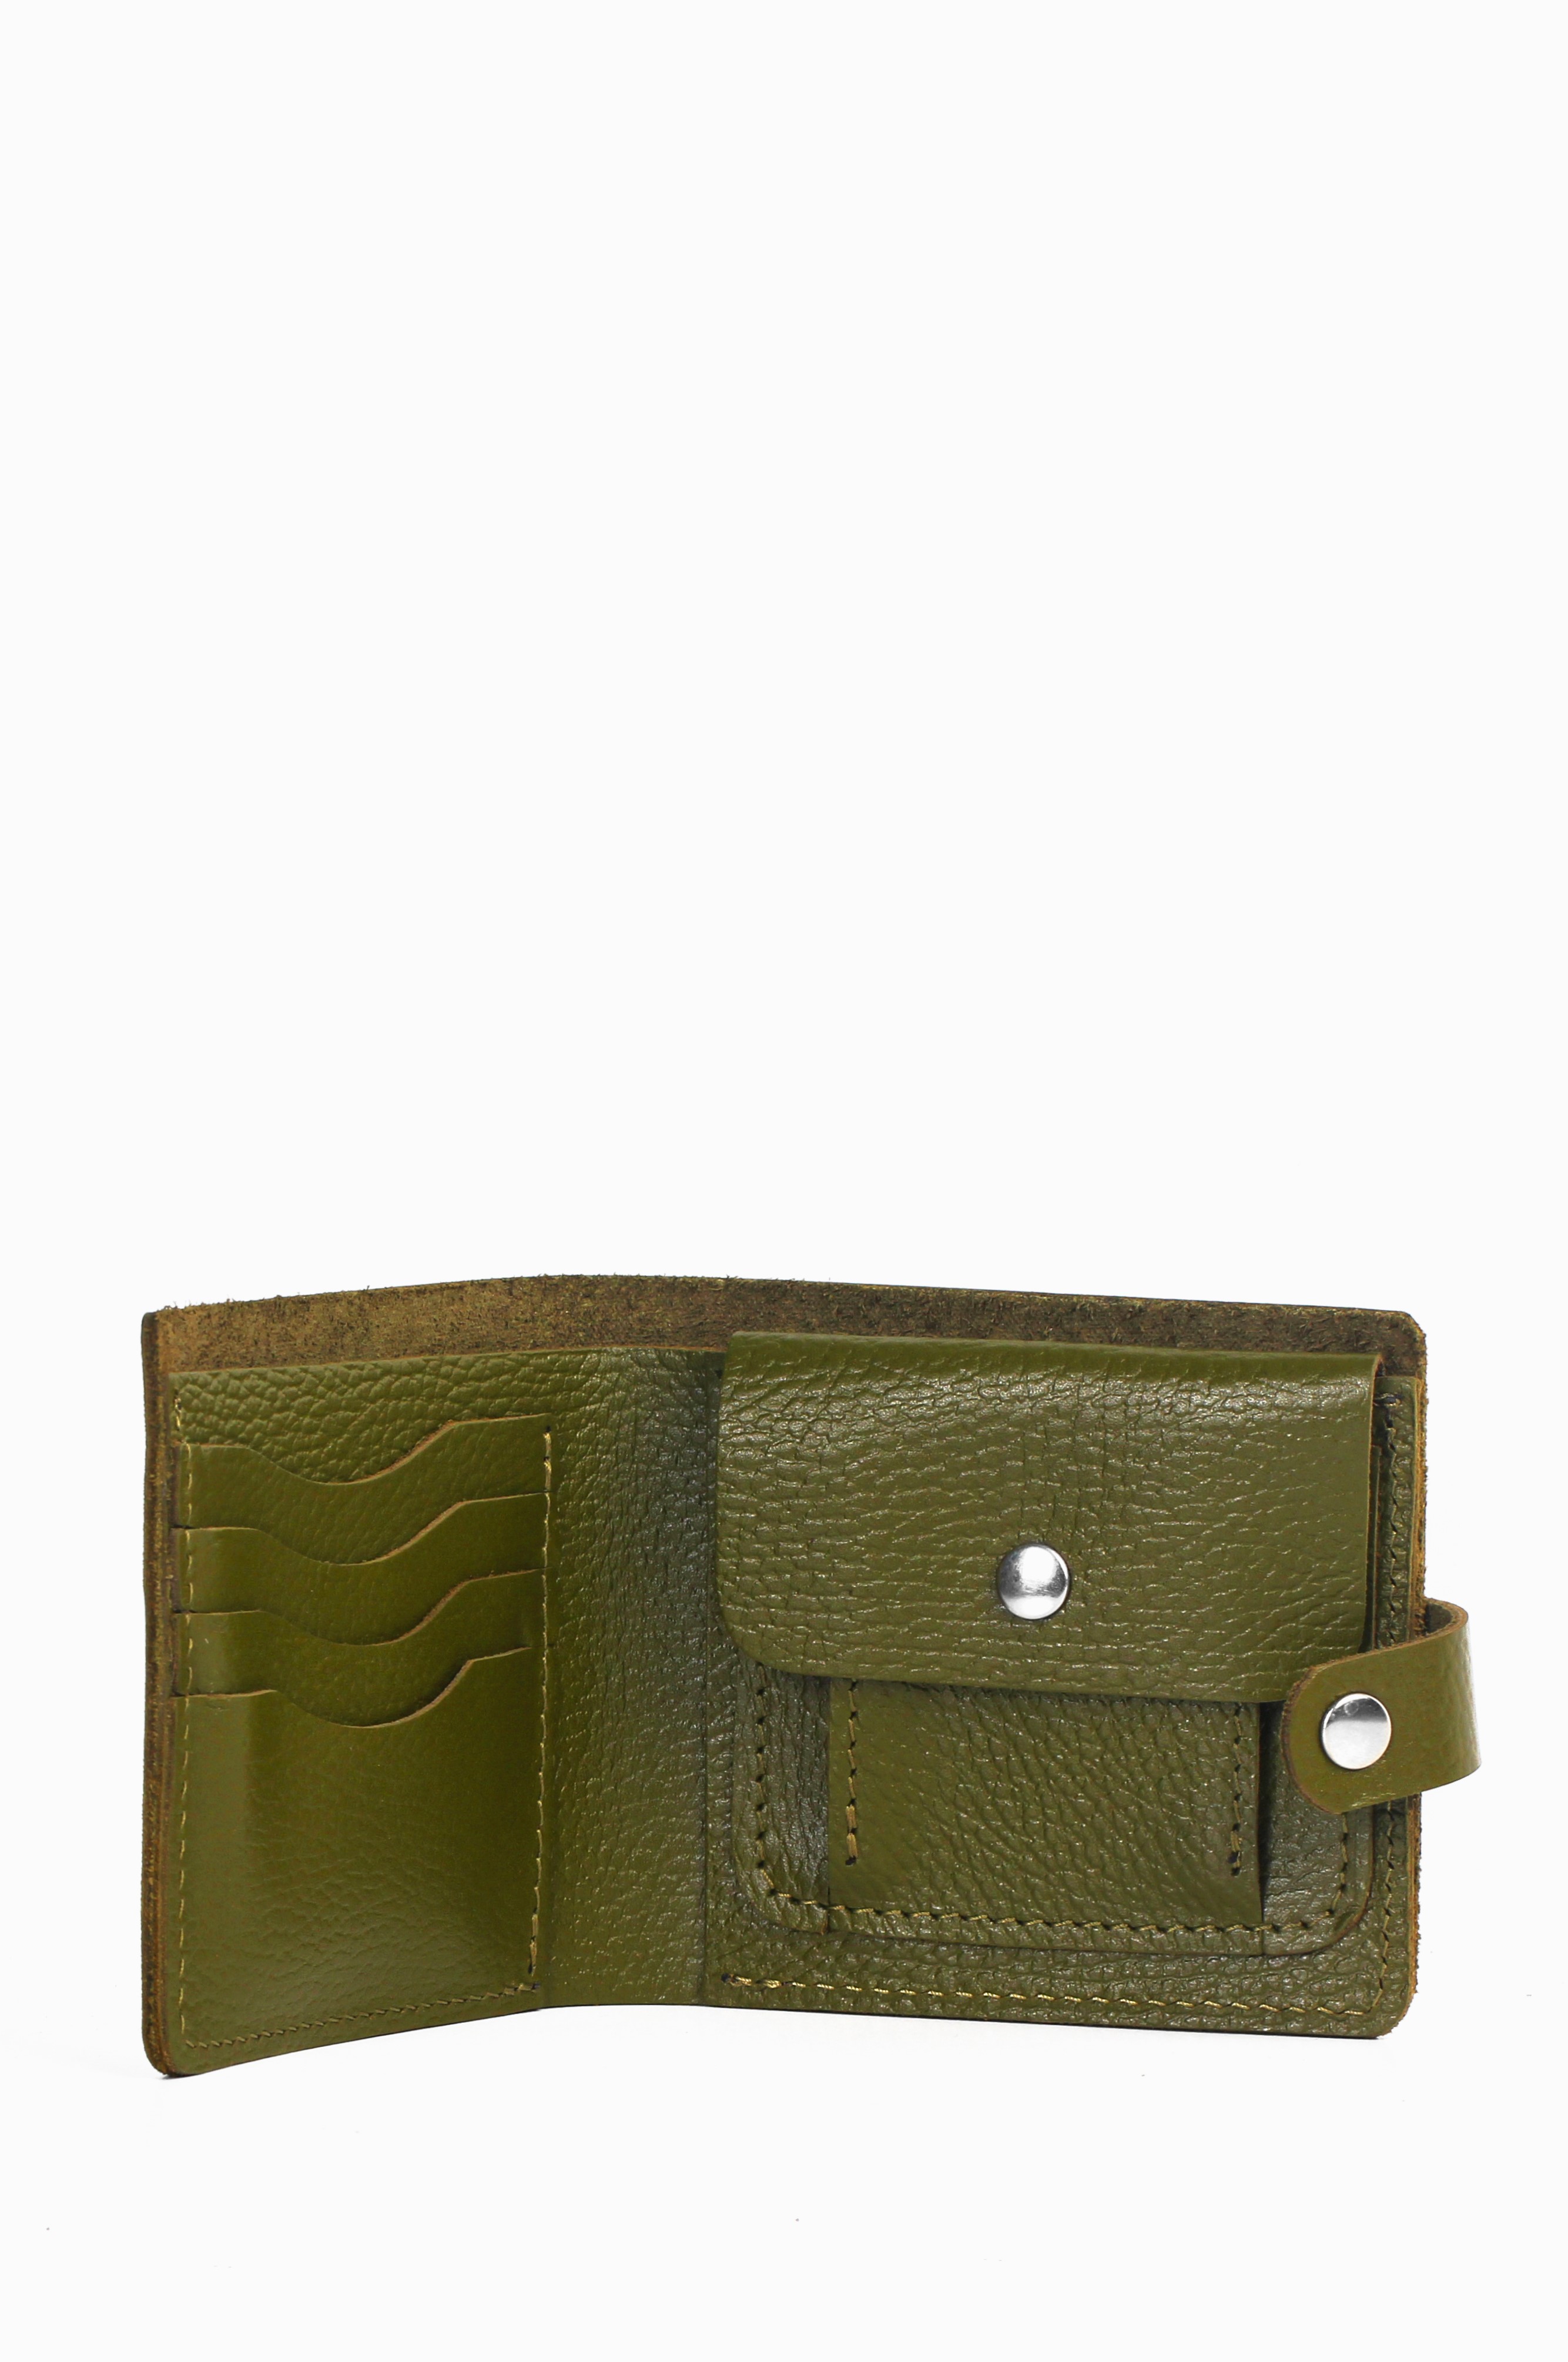 Кожаный кошелек W005 khaki grain